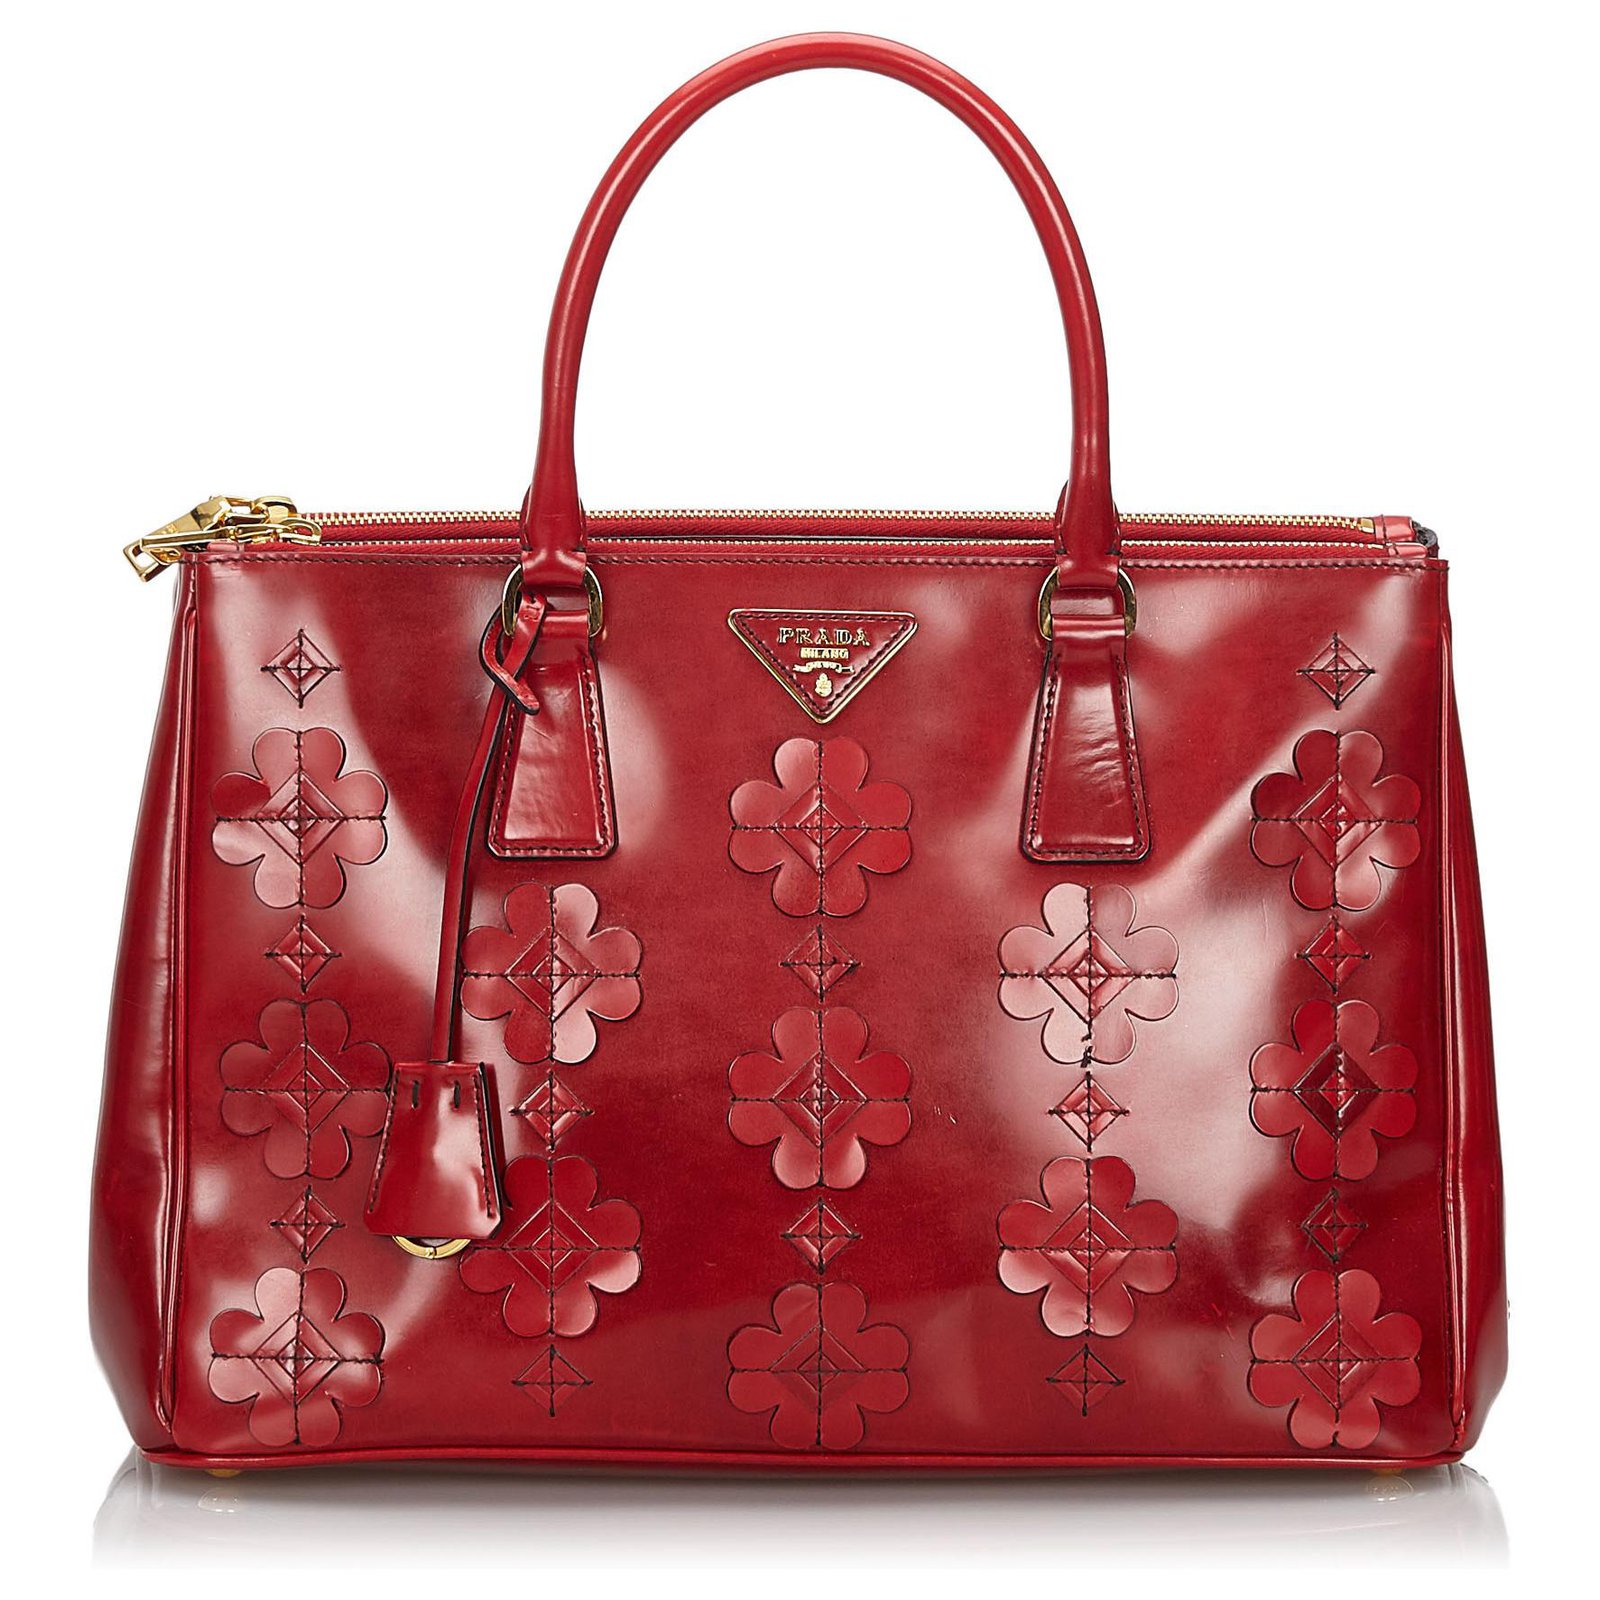 Prada Prada Red Spazzolato Flowers Galleria Handbag Handbags Leather,Patent leather Red ref ...